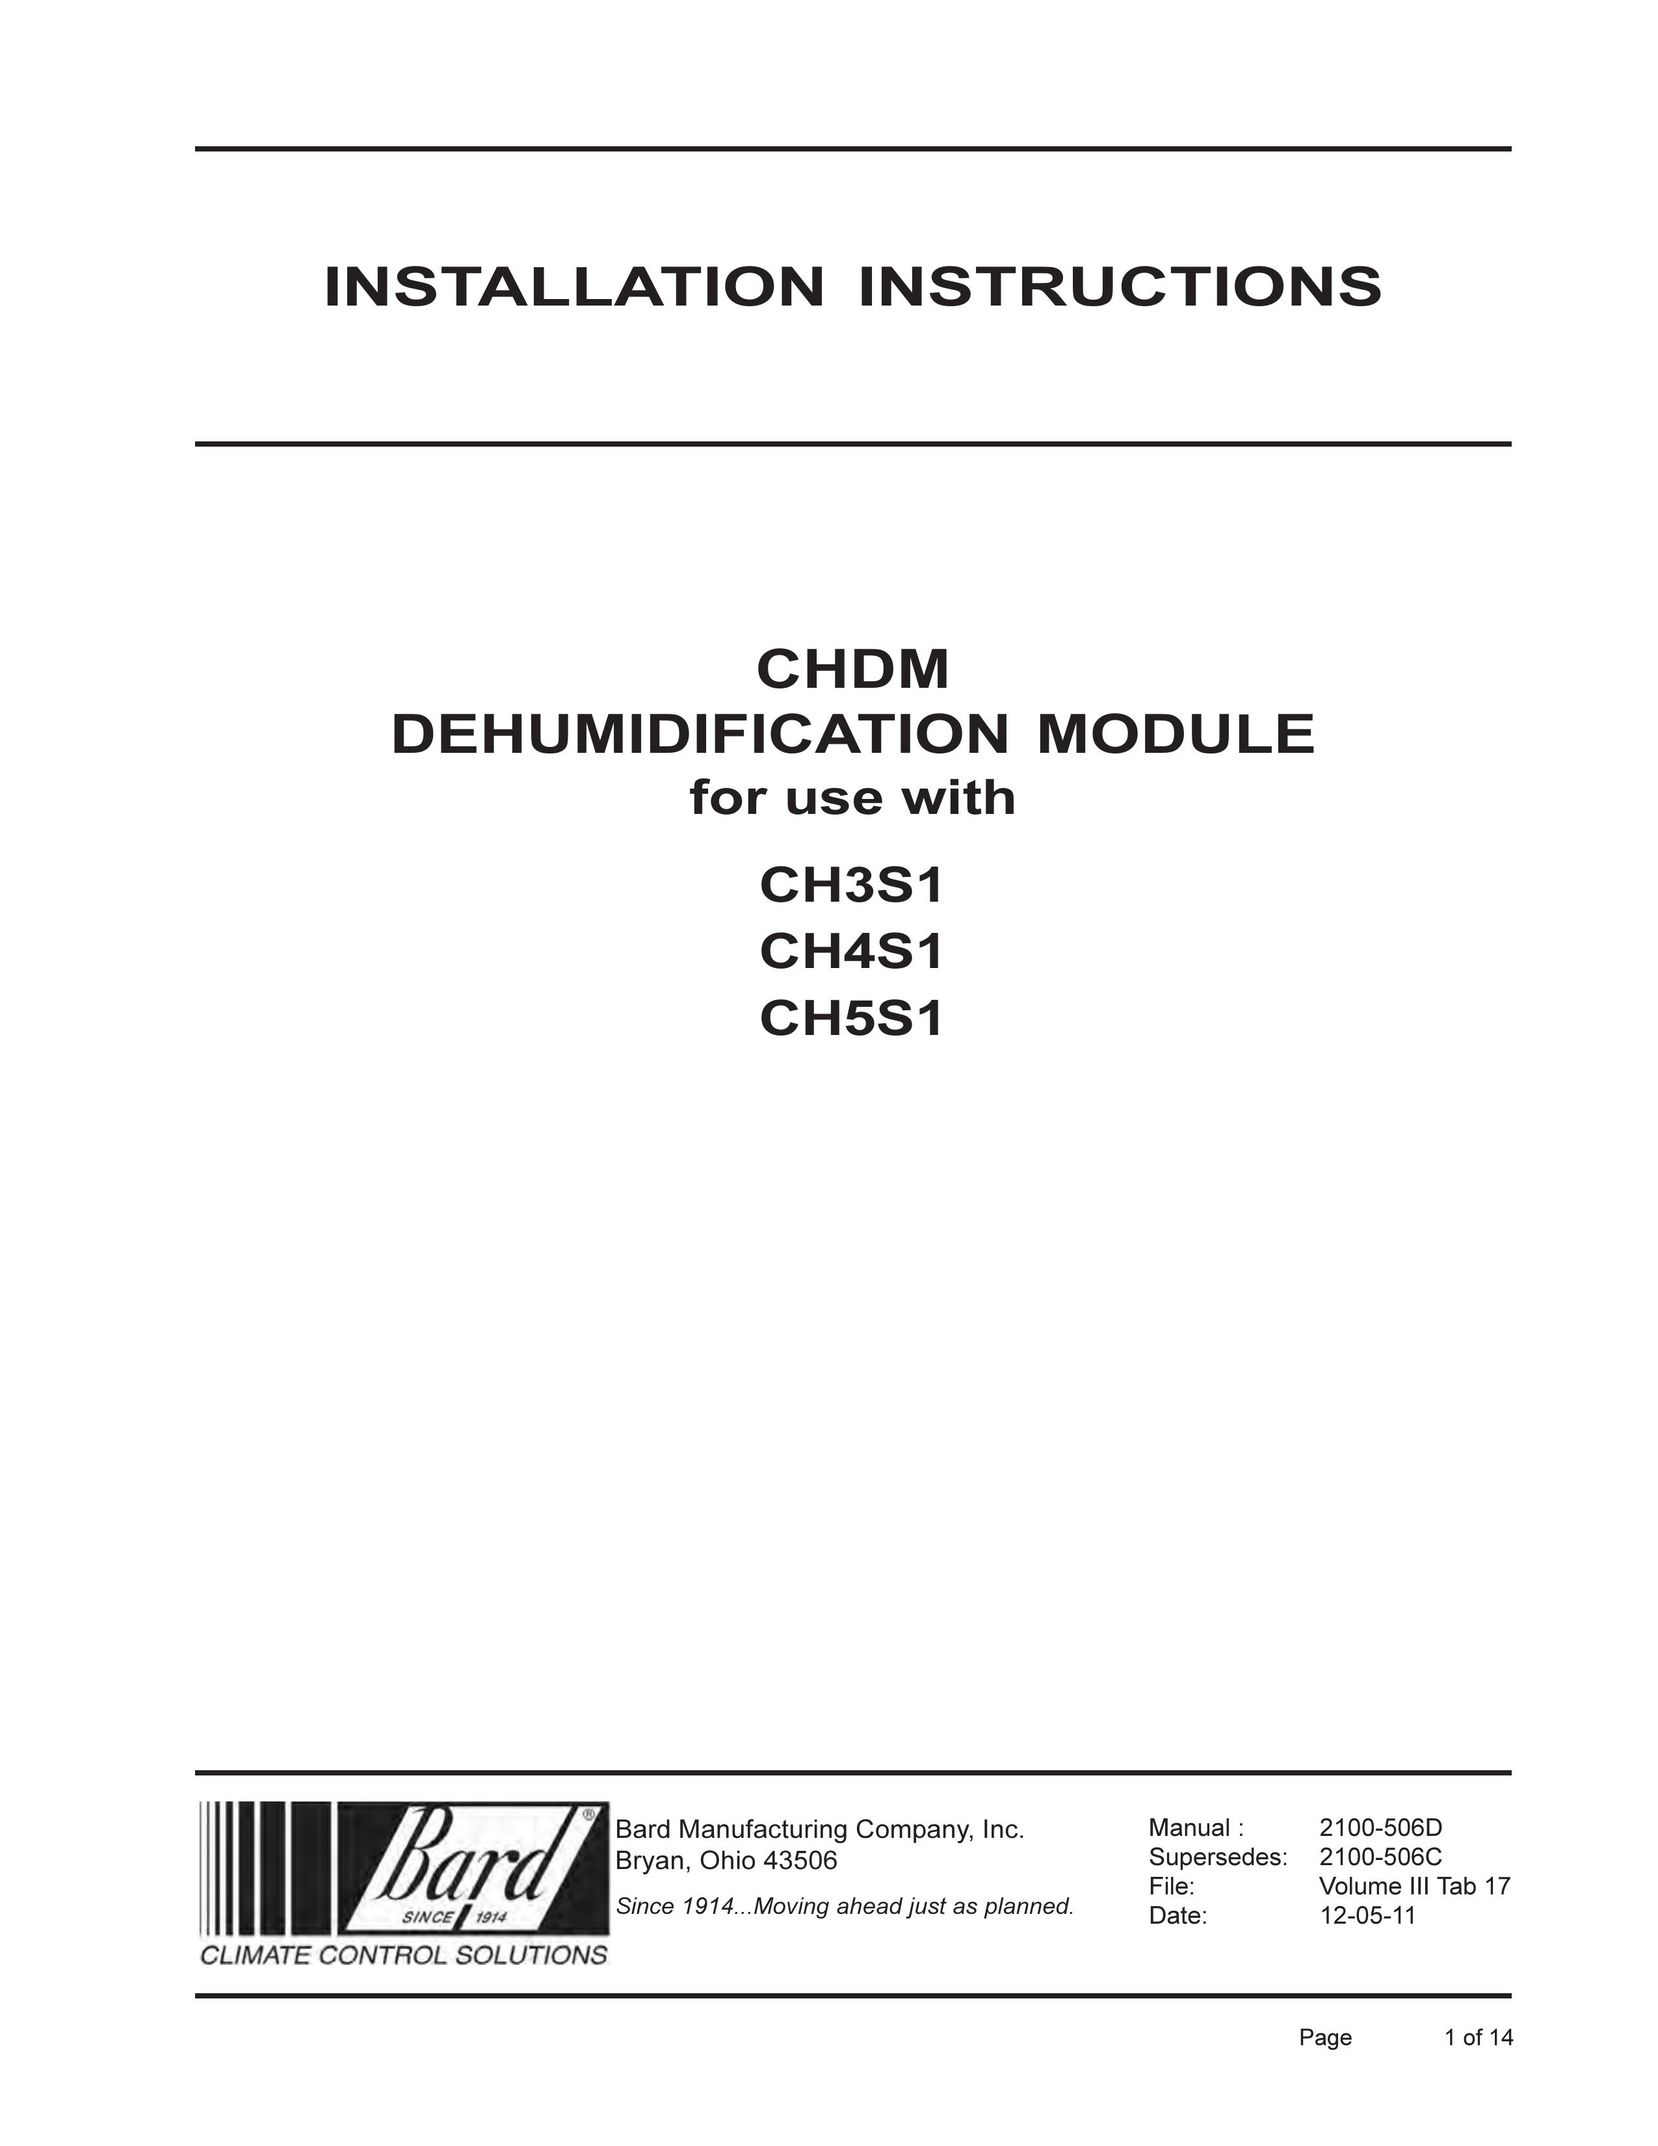 Bard CH5S1 Dehumidifier User Manual